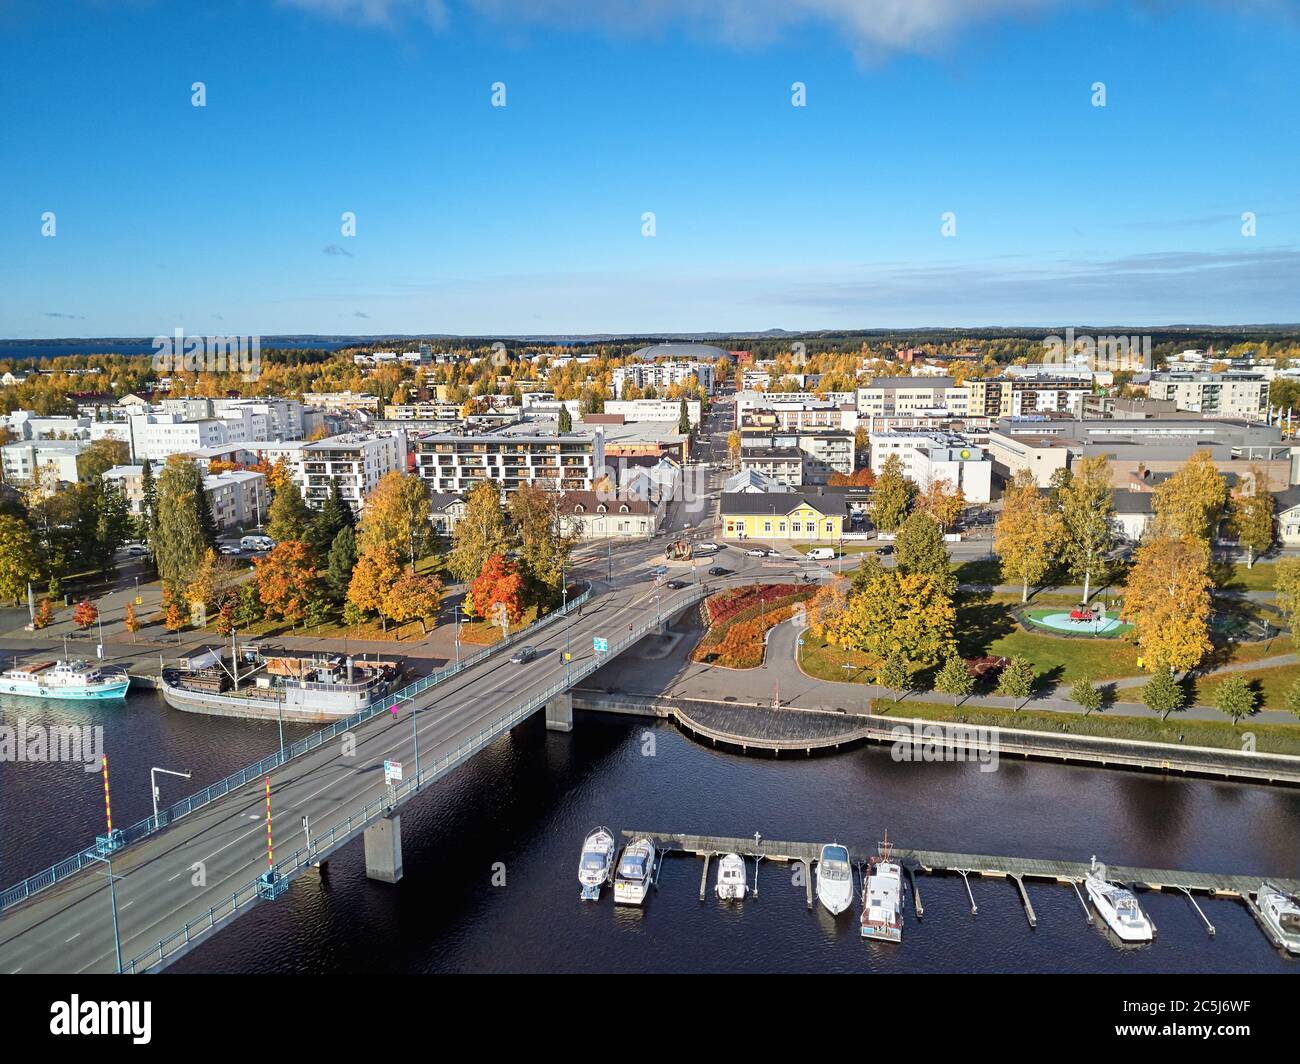 JOENSUU / FINLAND - October 4 2018: Aerial view of center of Joensuu city. Beautiful Autumn City with yellow-orange trees in the Sunny Day. Stock Photo